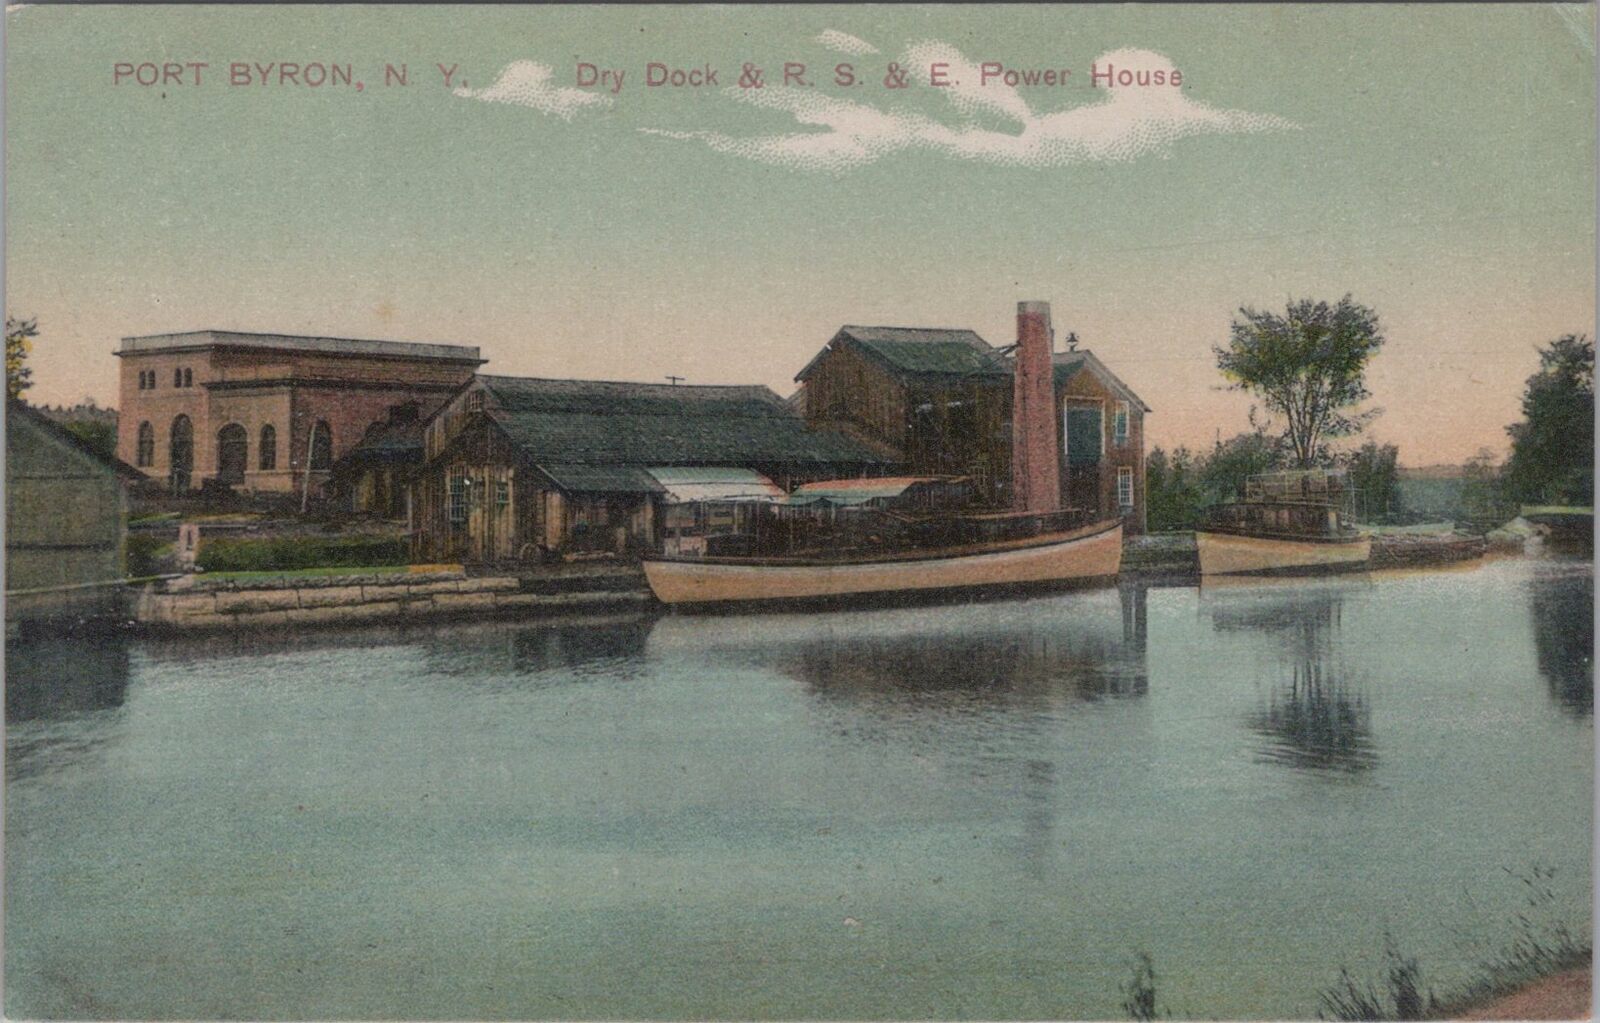 Dry Dock & Power House Port Byron New York c1910s Postcard